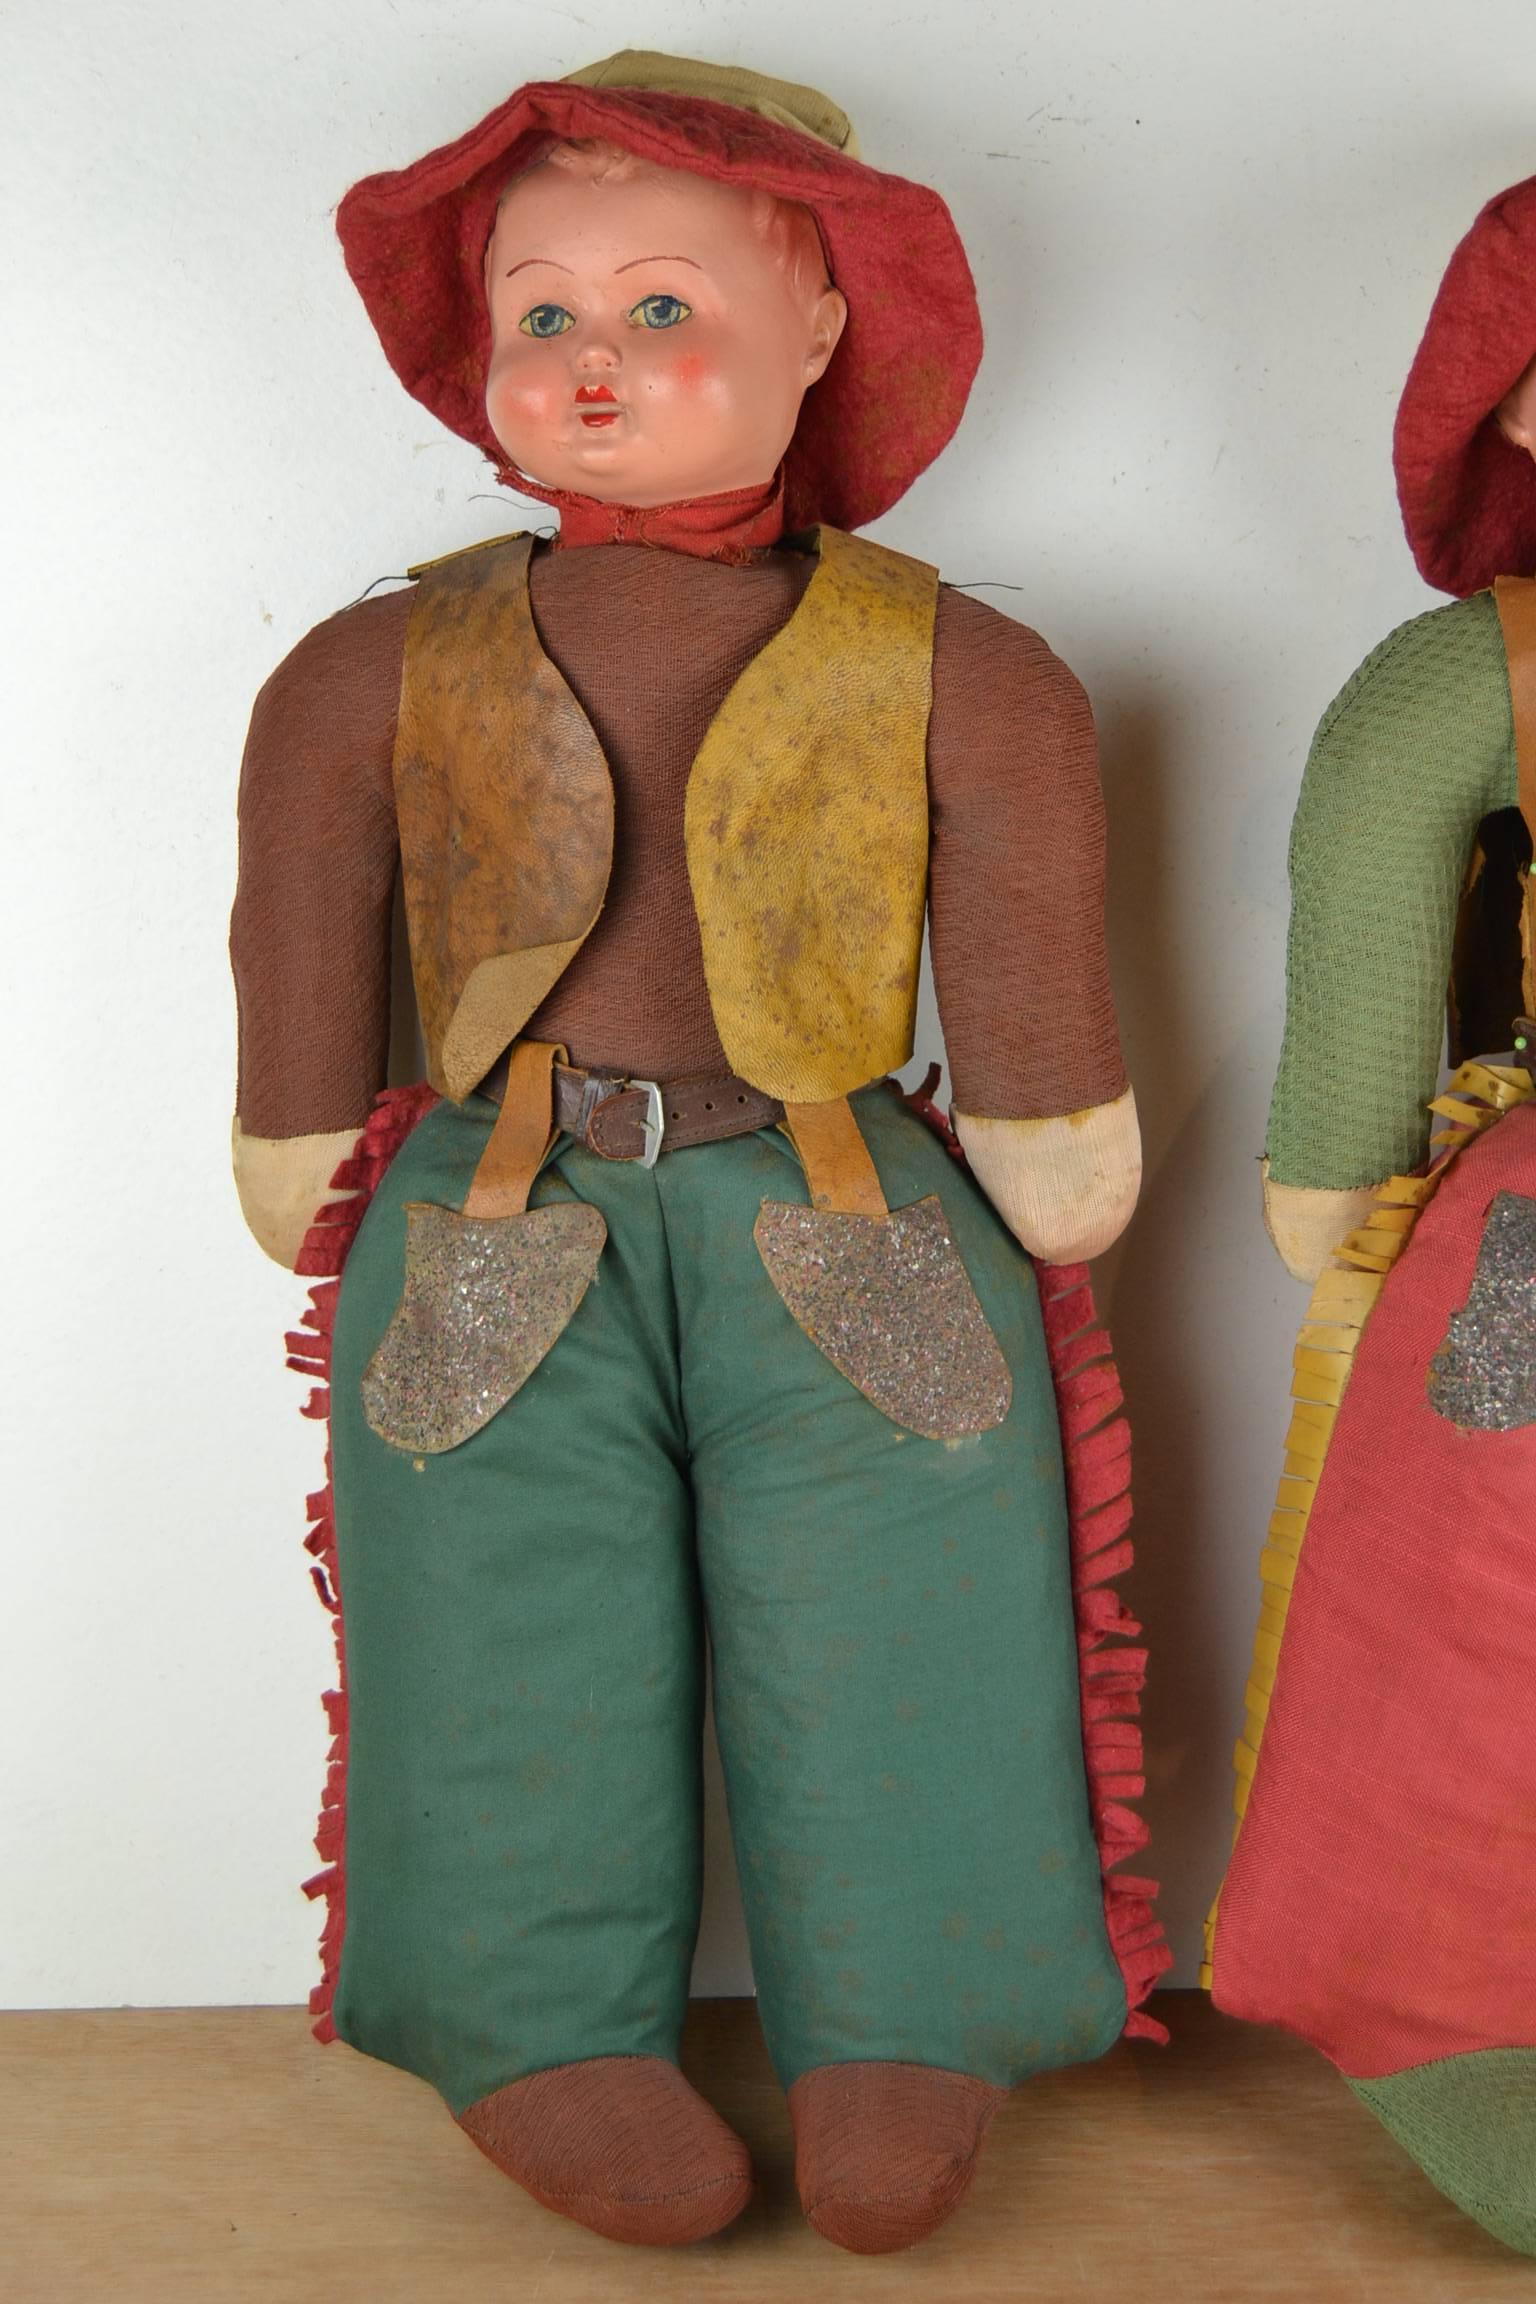 VINTAGE SELVAGGIO WEST COWGIRL 70er bambole VESTITI outfit action armi ACTION FIGURE 